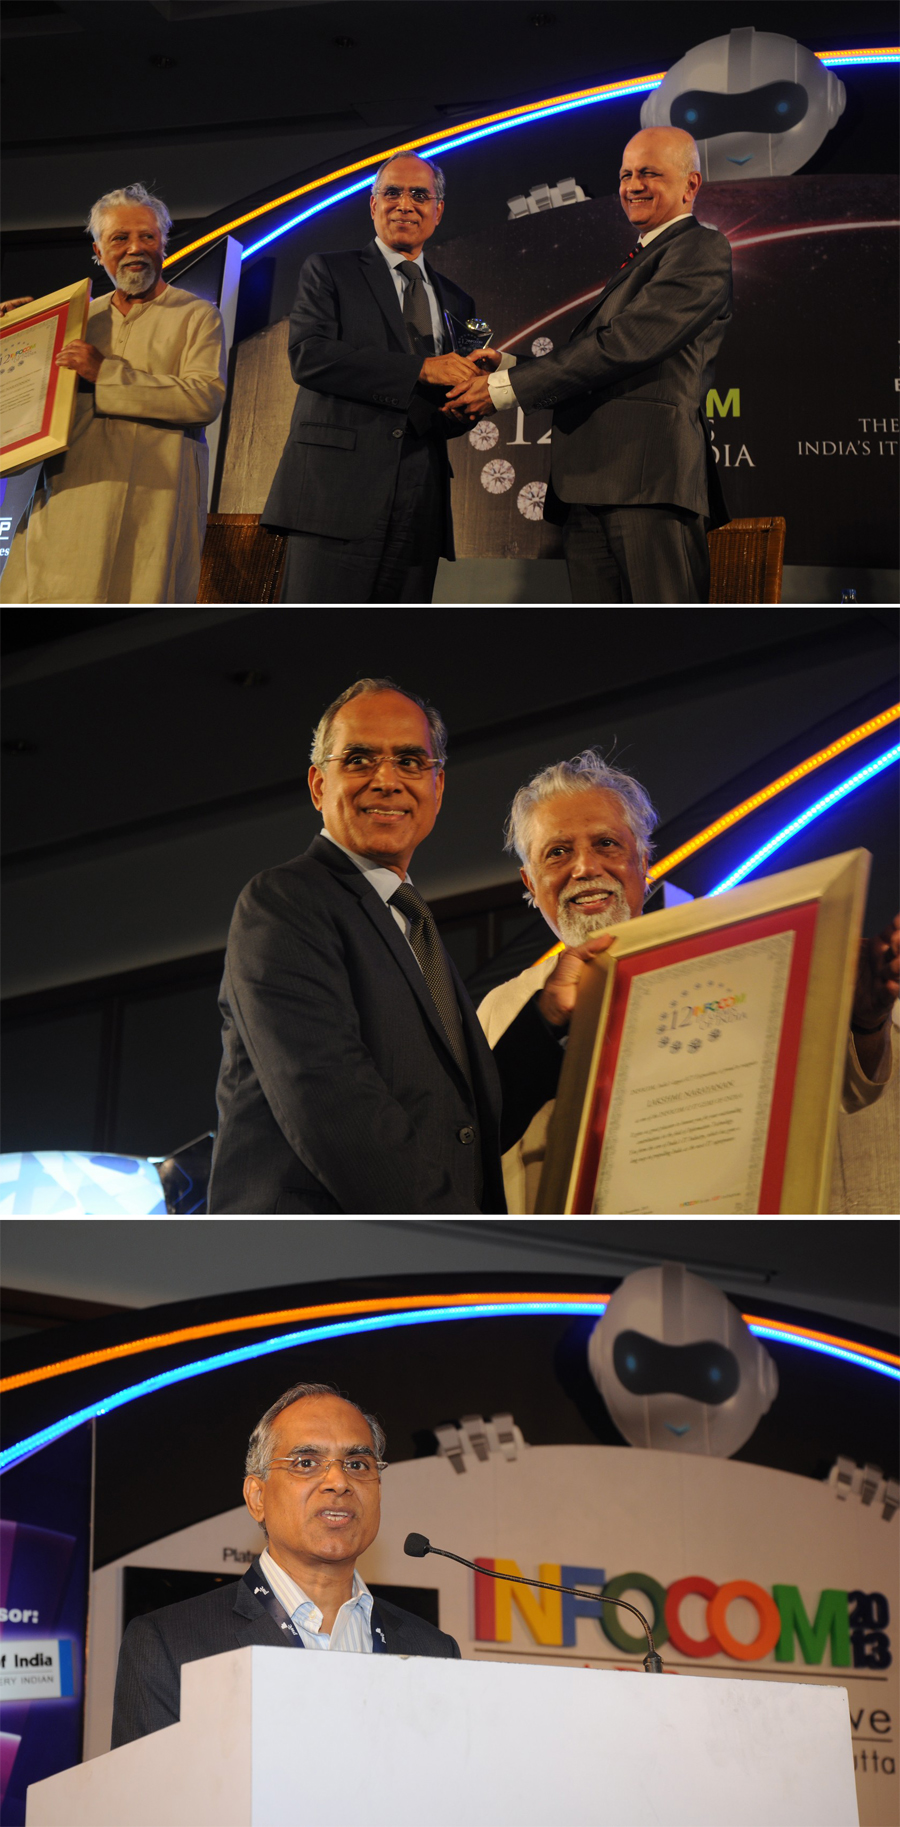 Lakshmi Narayanan, Vice Chairman, Cognizant, Honored with the ‘IT Gem of India’ Award at INFOCOM 2013